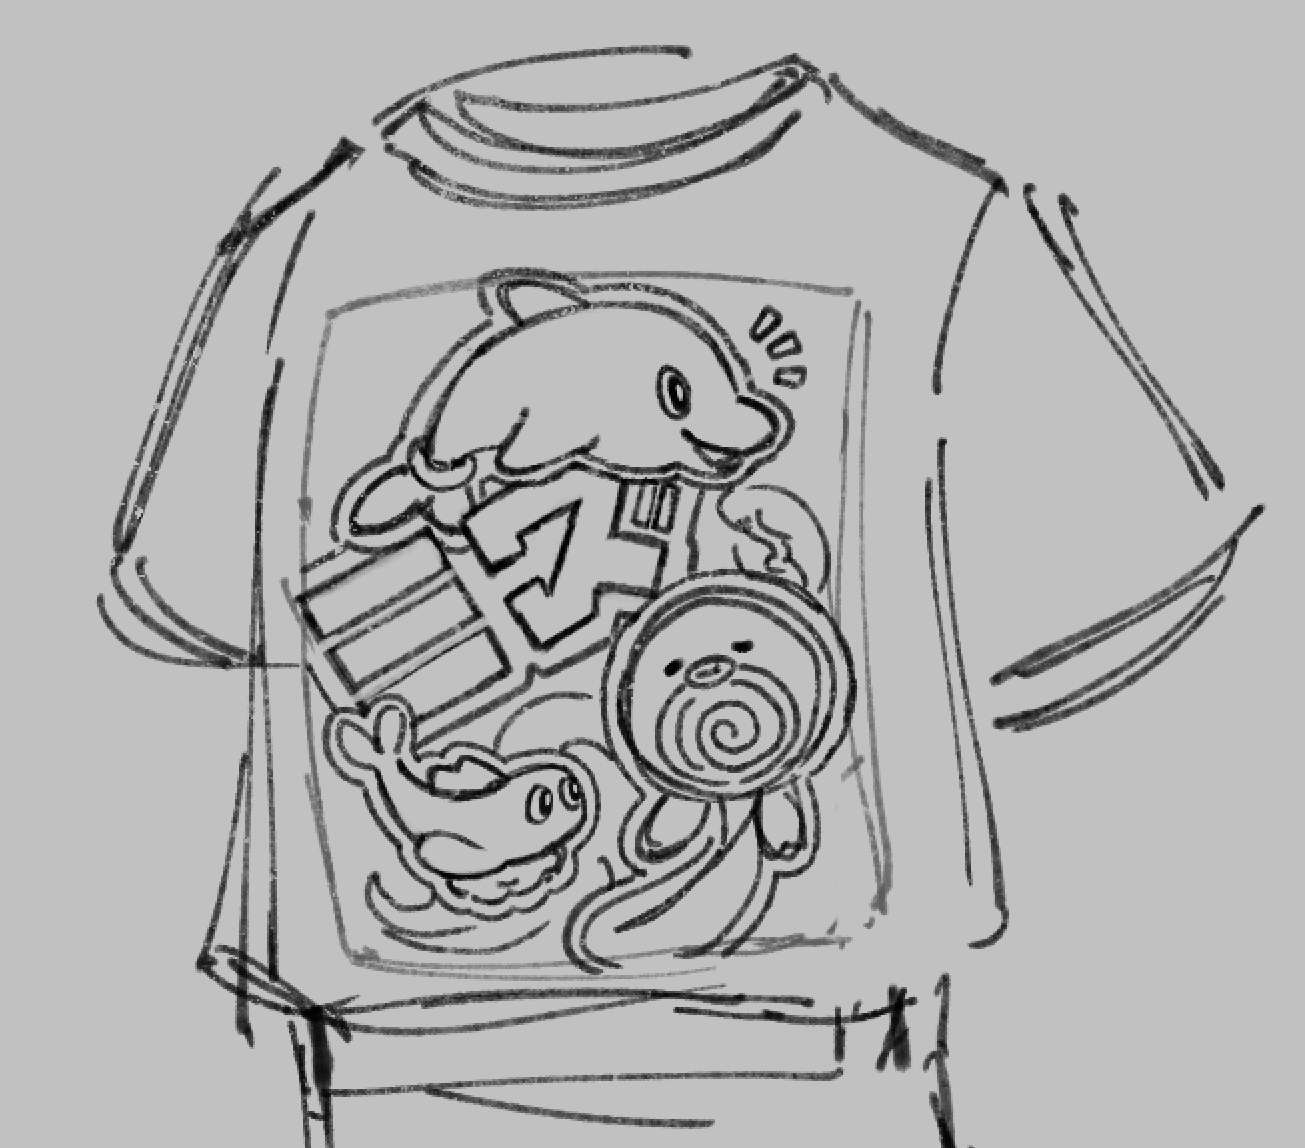 Shirt design idea 